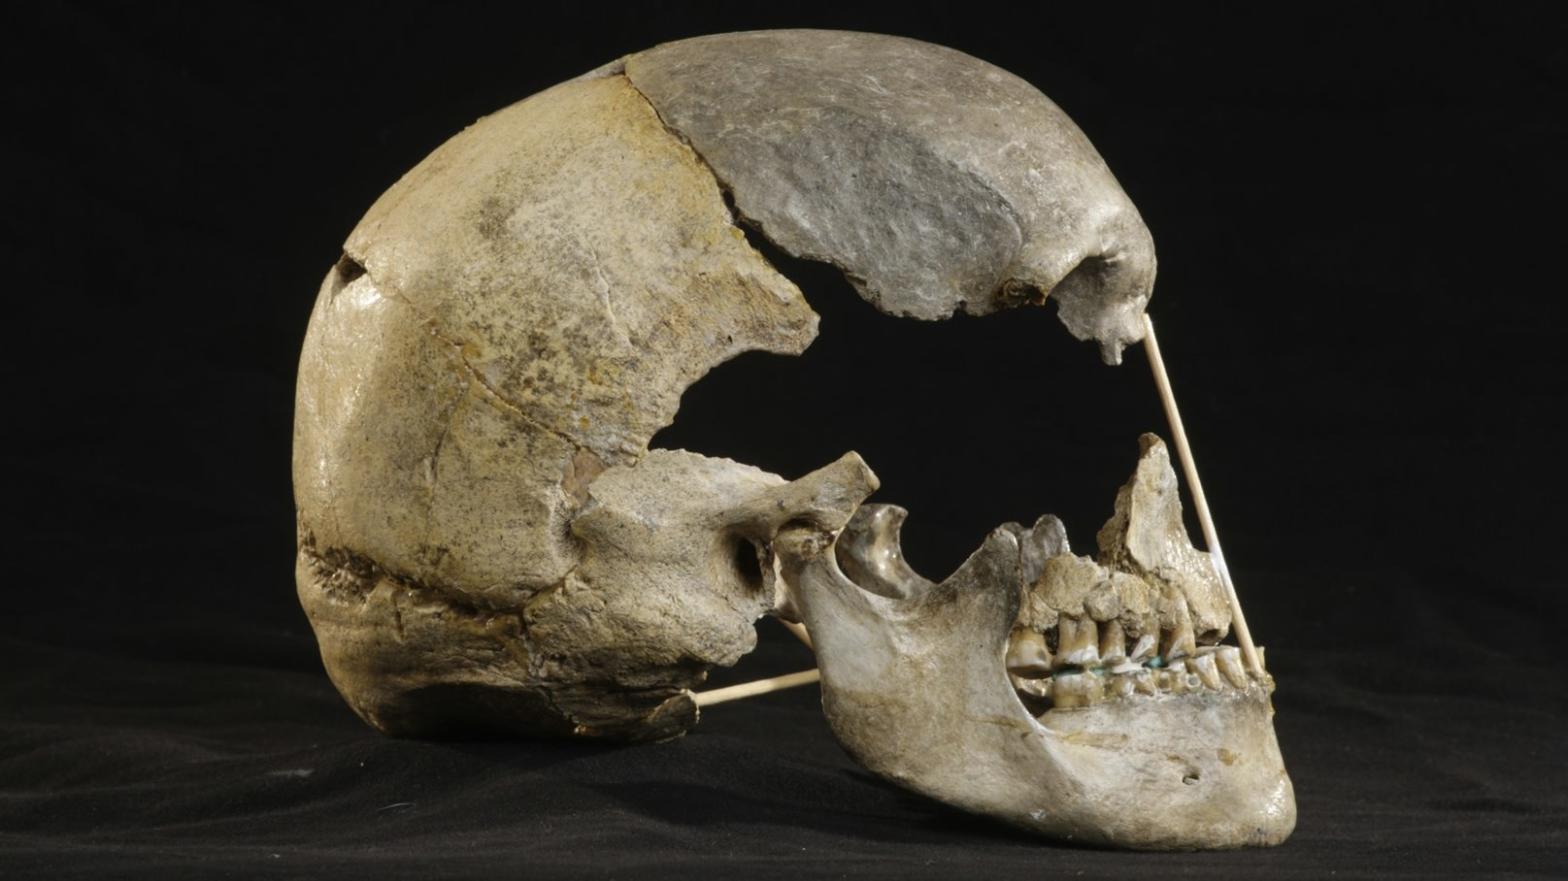 The Zlatý kůň cranium.  (Image: Martin Frouz)